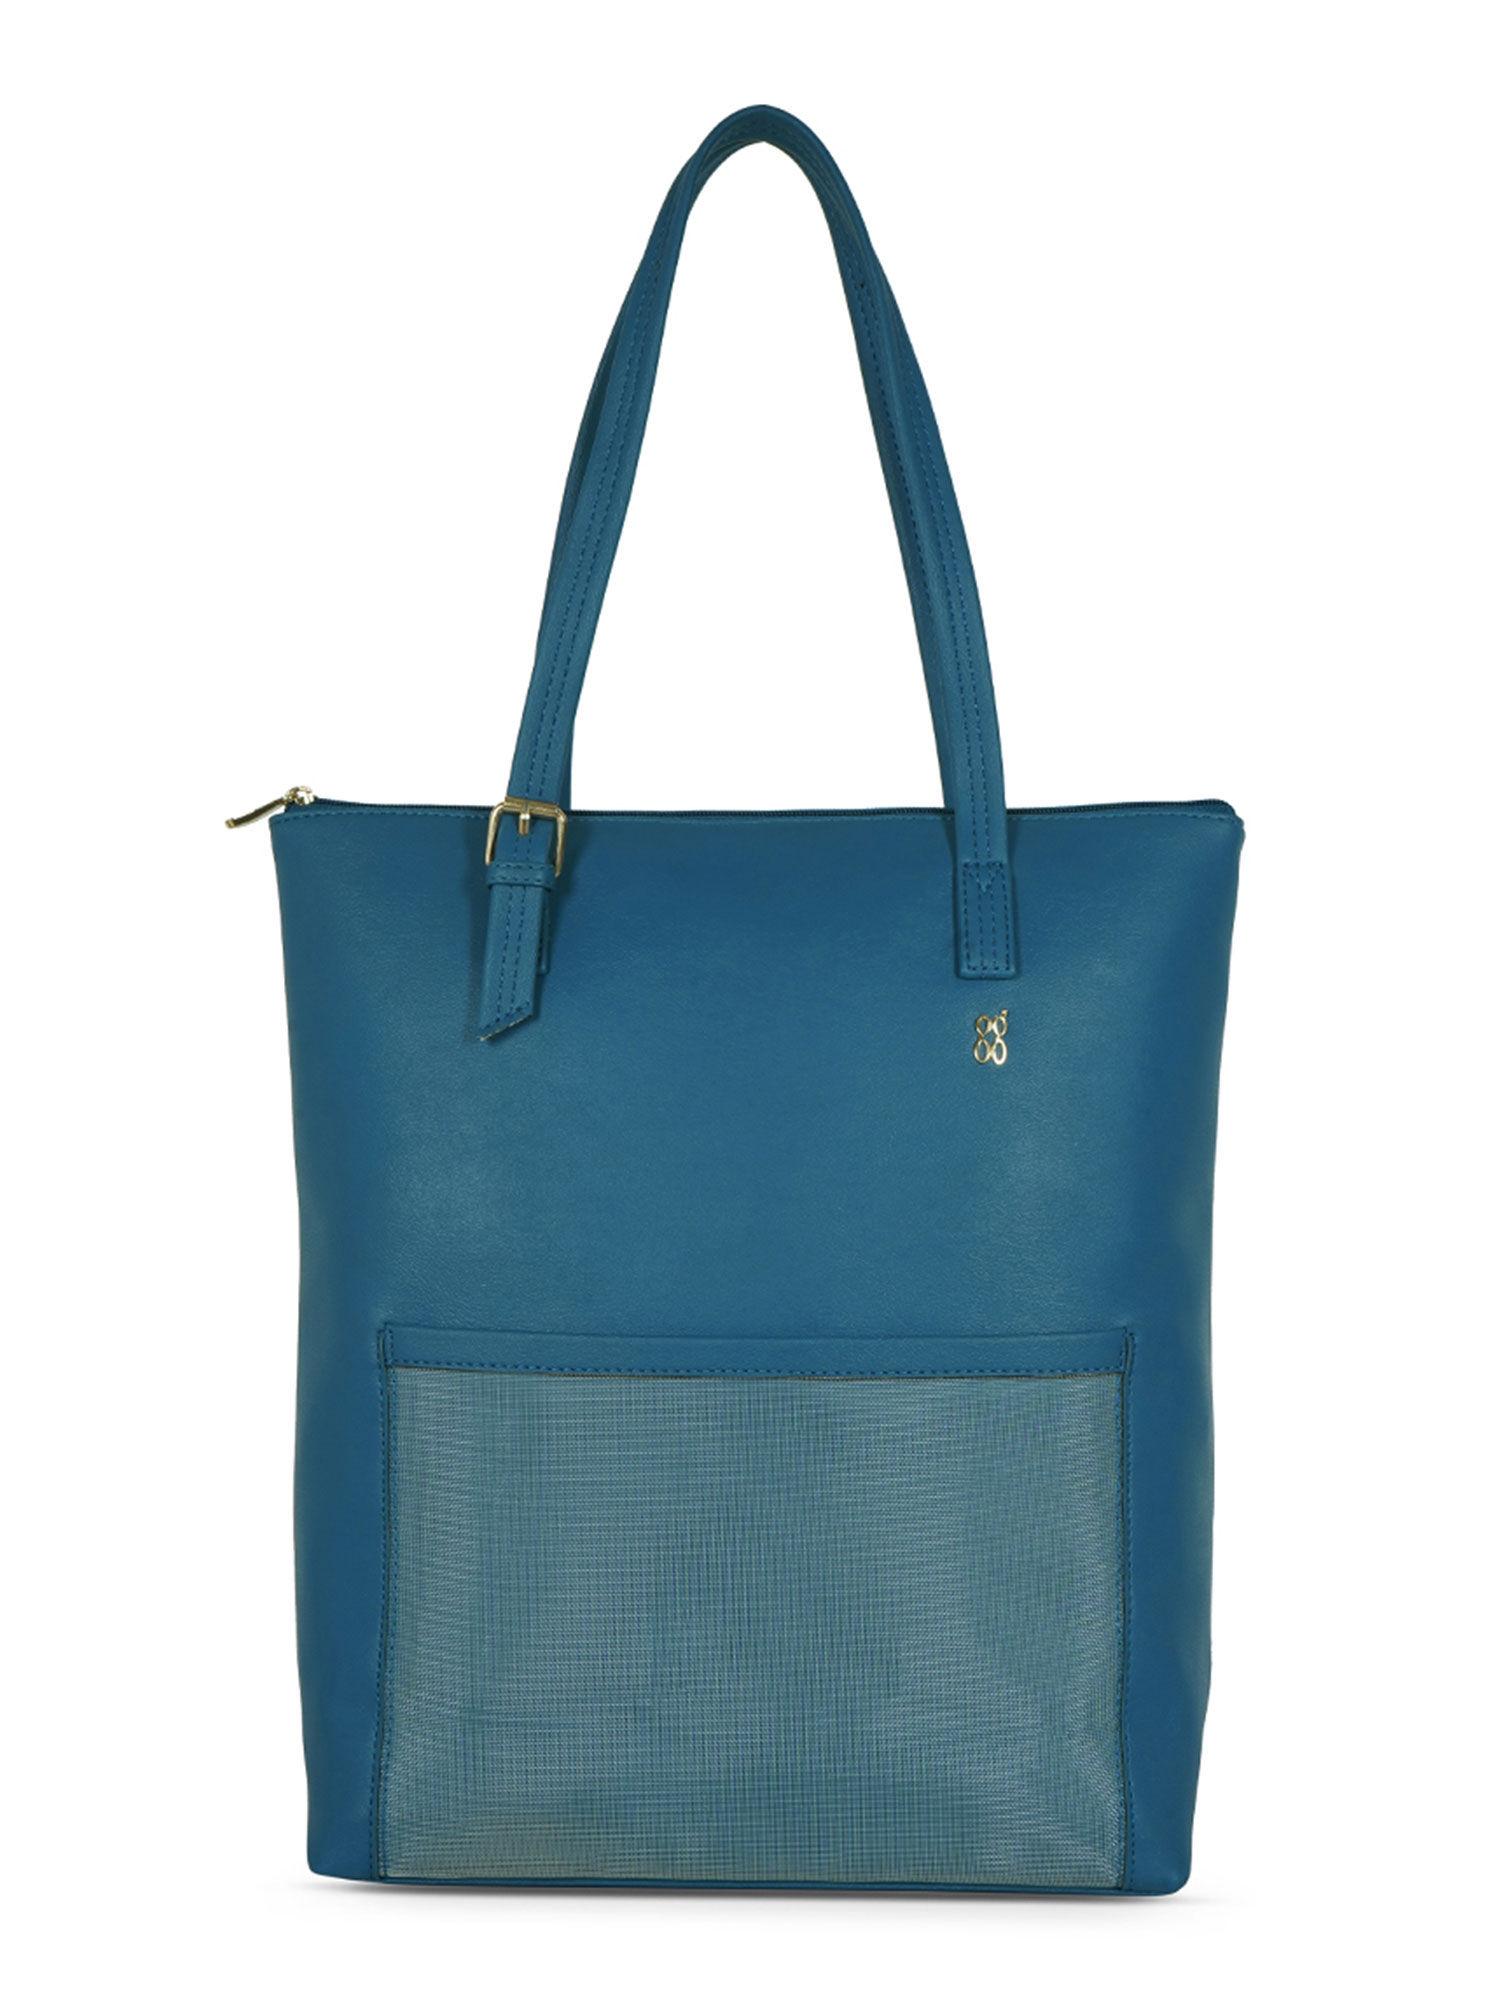 ralphone blue large tote handbag